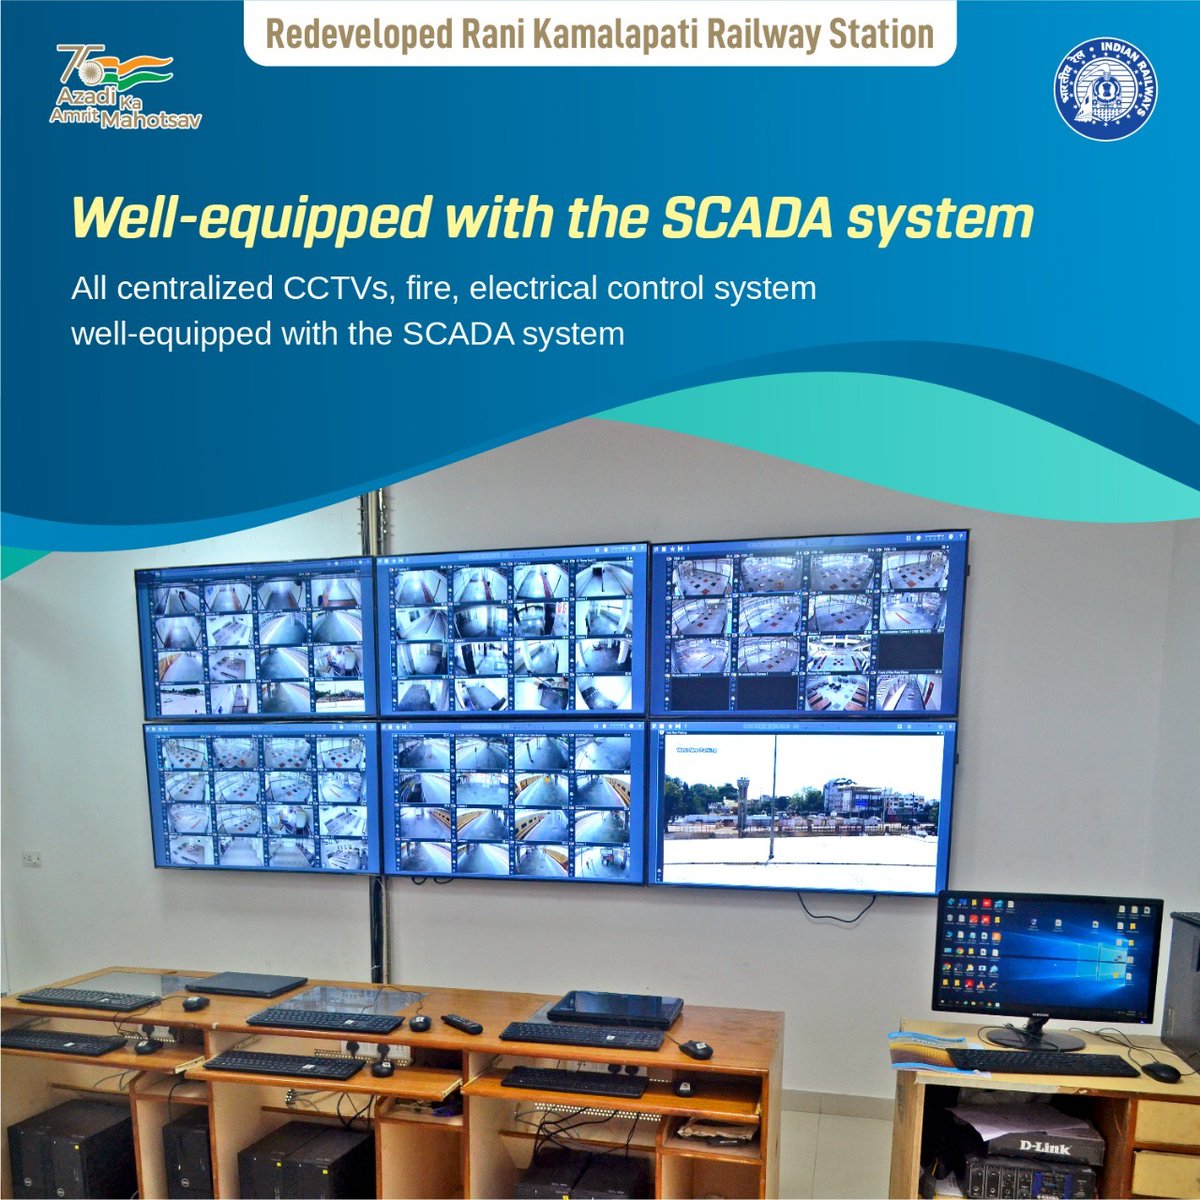 Rani Kamalapati Railway Station is well equipped with SCADA System ensuring world-class safety and compliances. #NayeBharatkaNayaStation